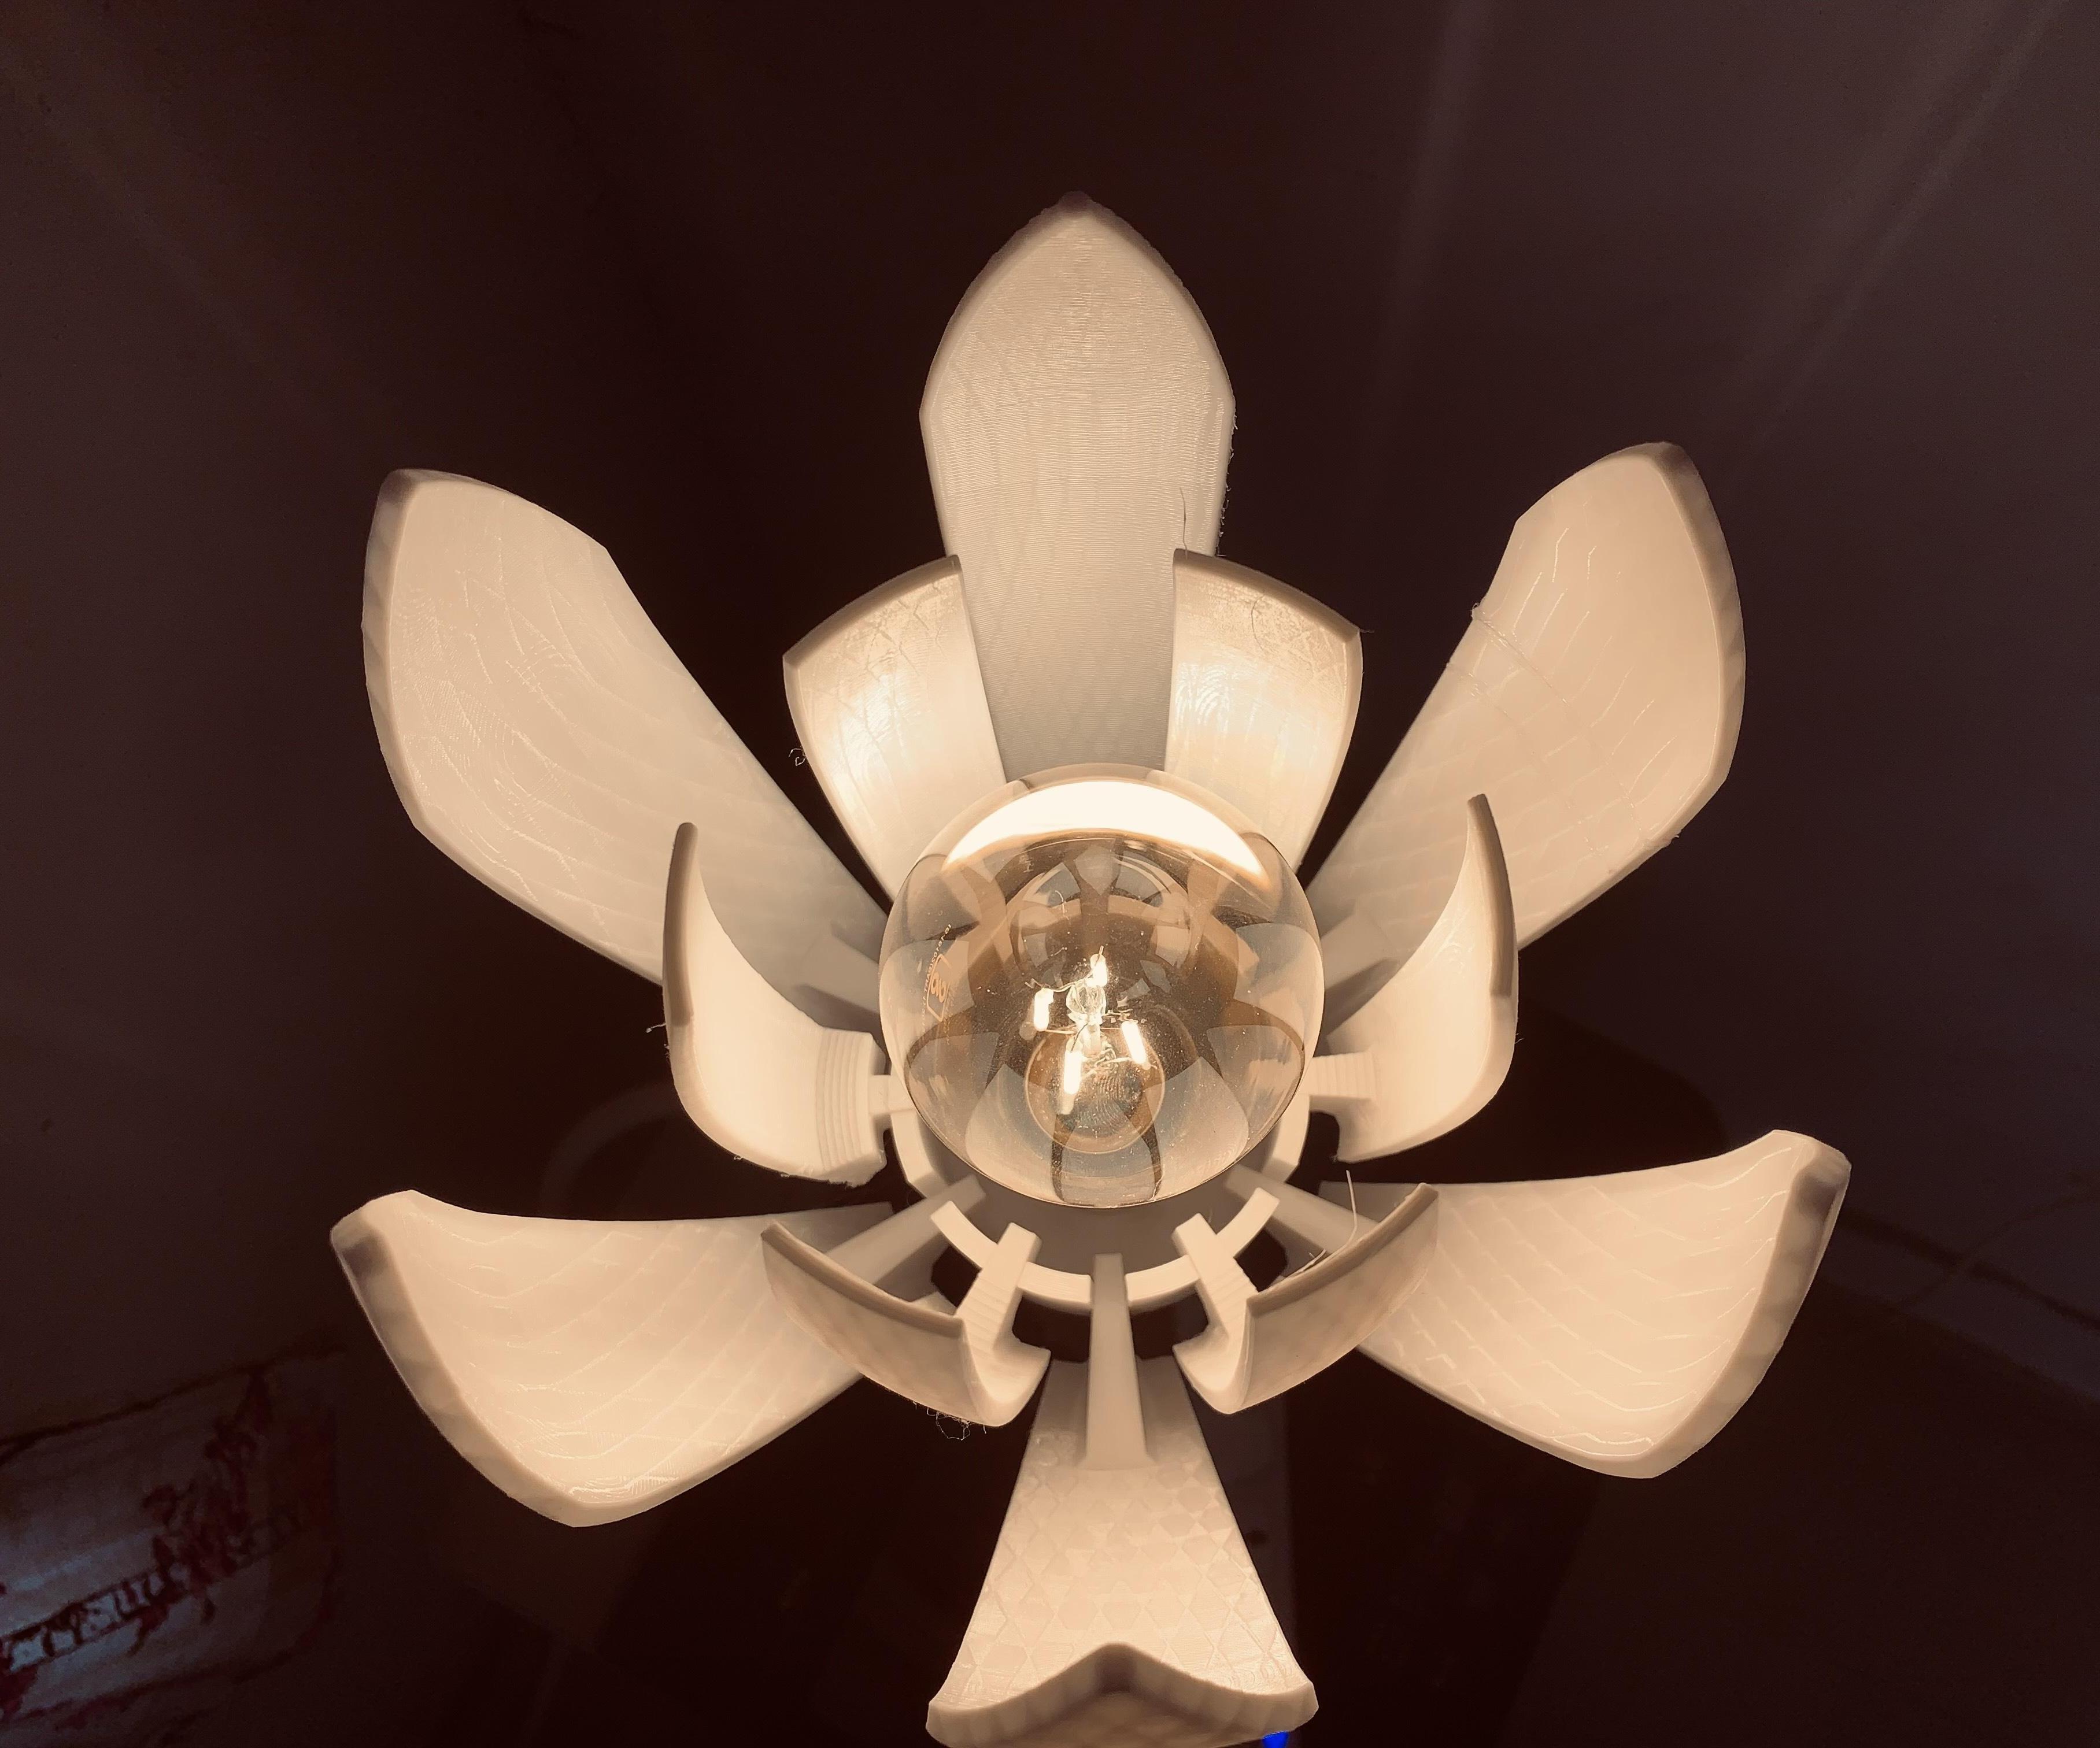 3D Printed Flower Shape Lamp.